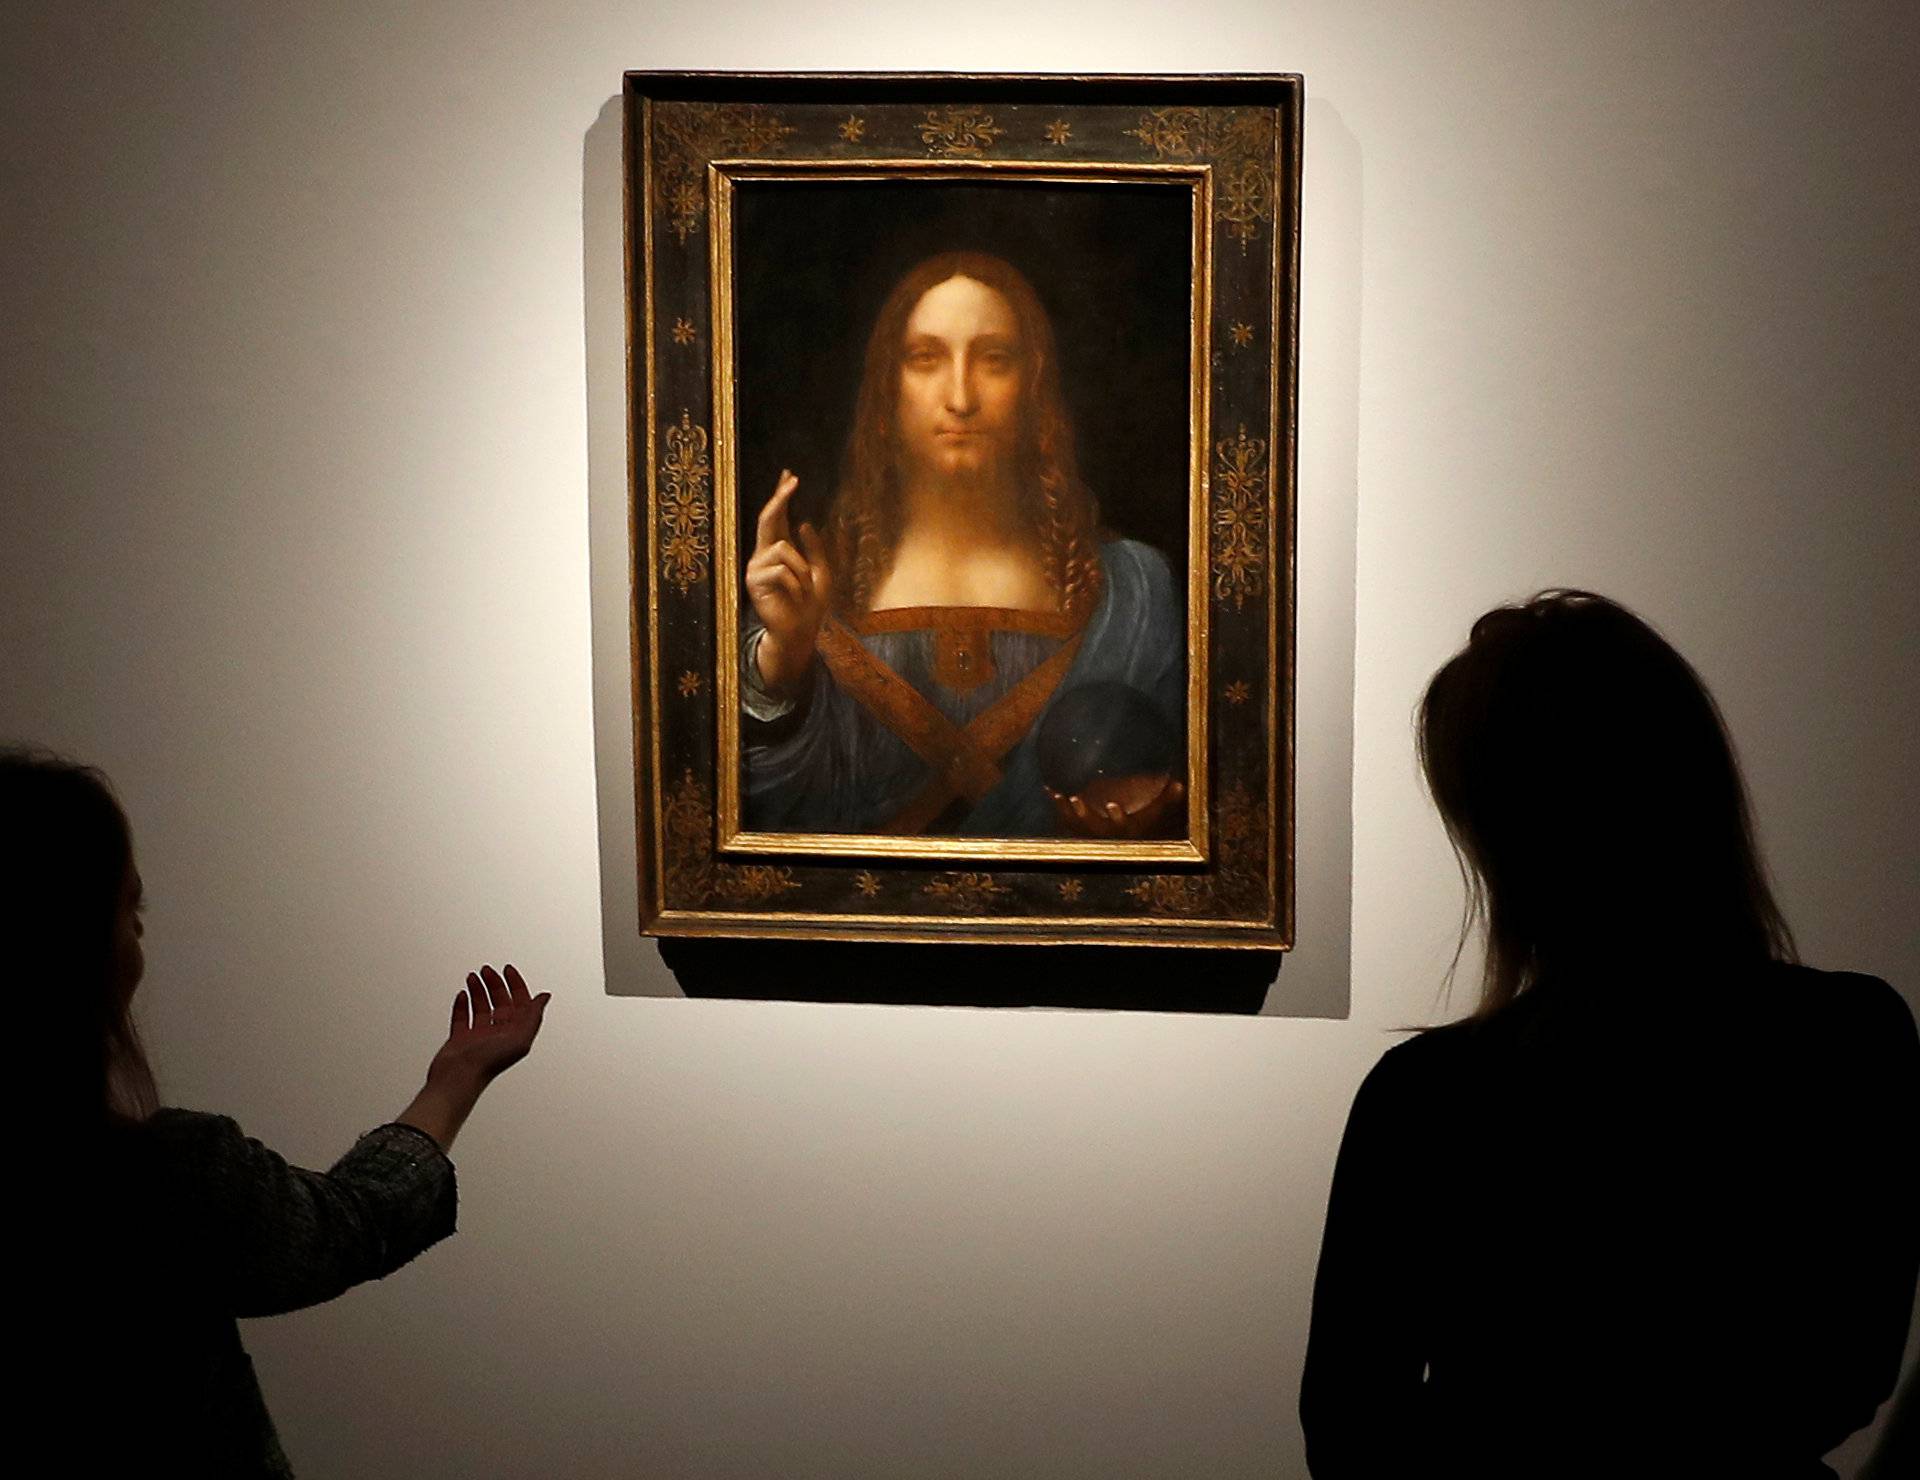 Members of Christie's staff pose for pictures next to Leonardo da Vinci's "Salvator Mundi" painting in London